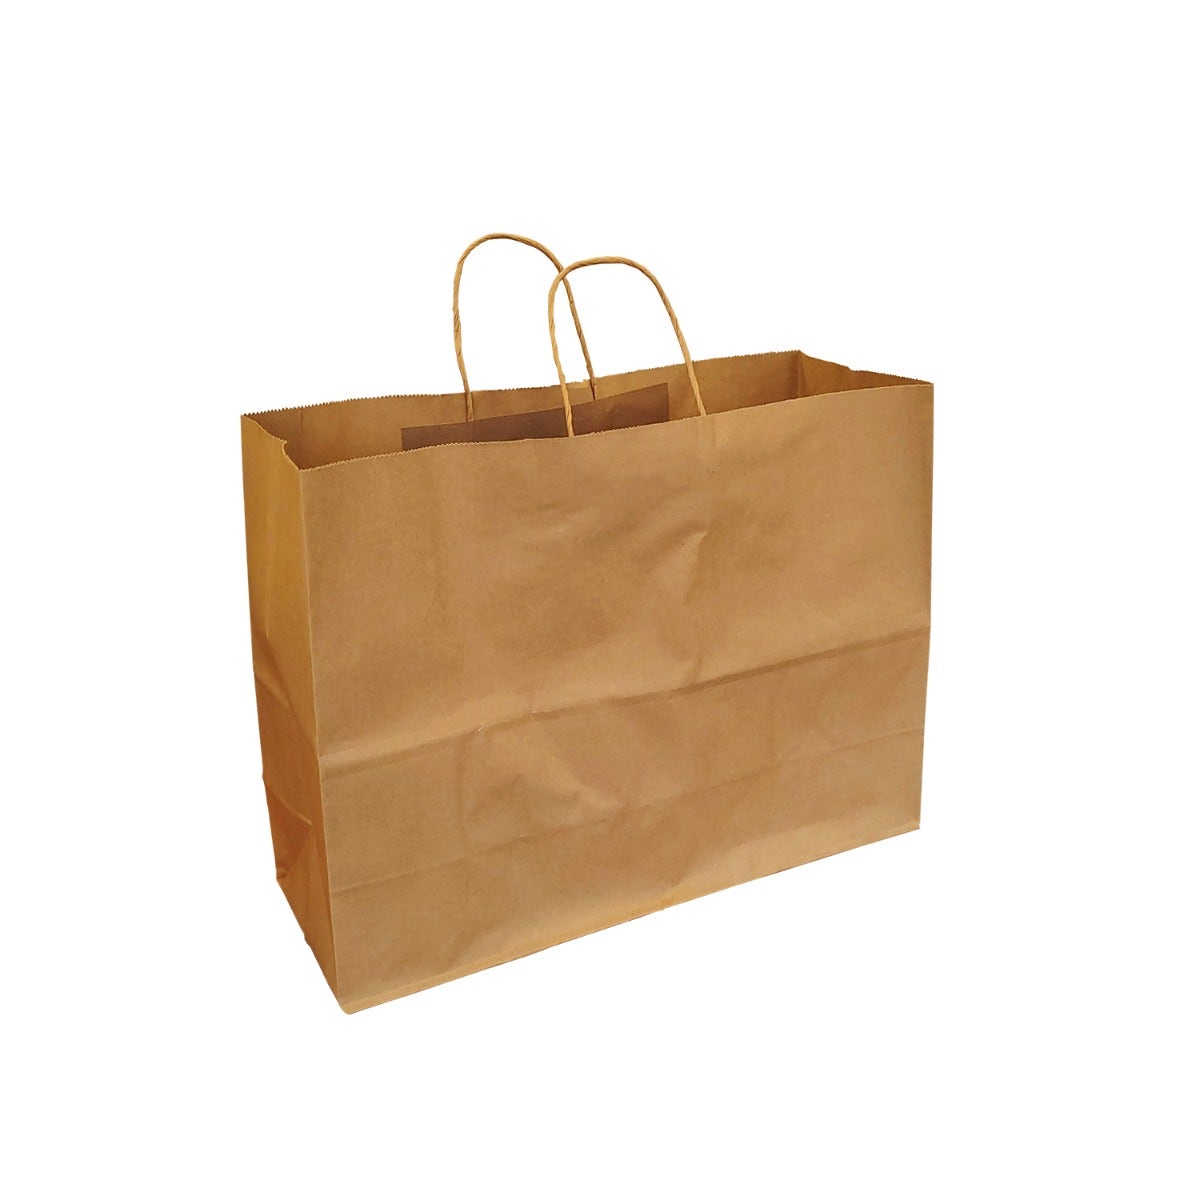 100% Recycled Paper Shopping Bags | Kraft Brown | Twisted Paper Handles - Eddie's Hang-Up Display Ltd.